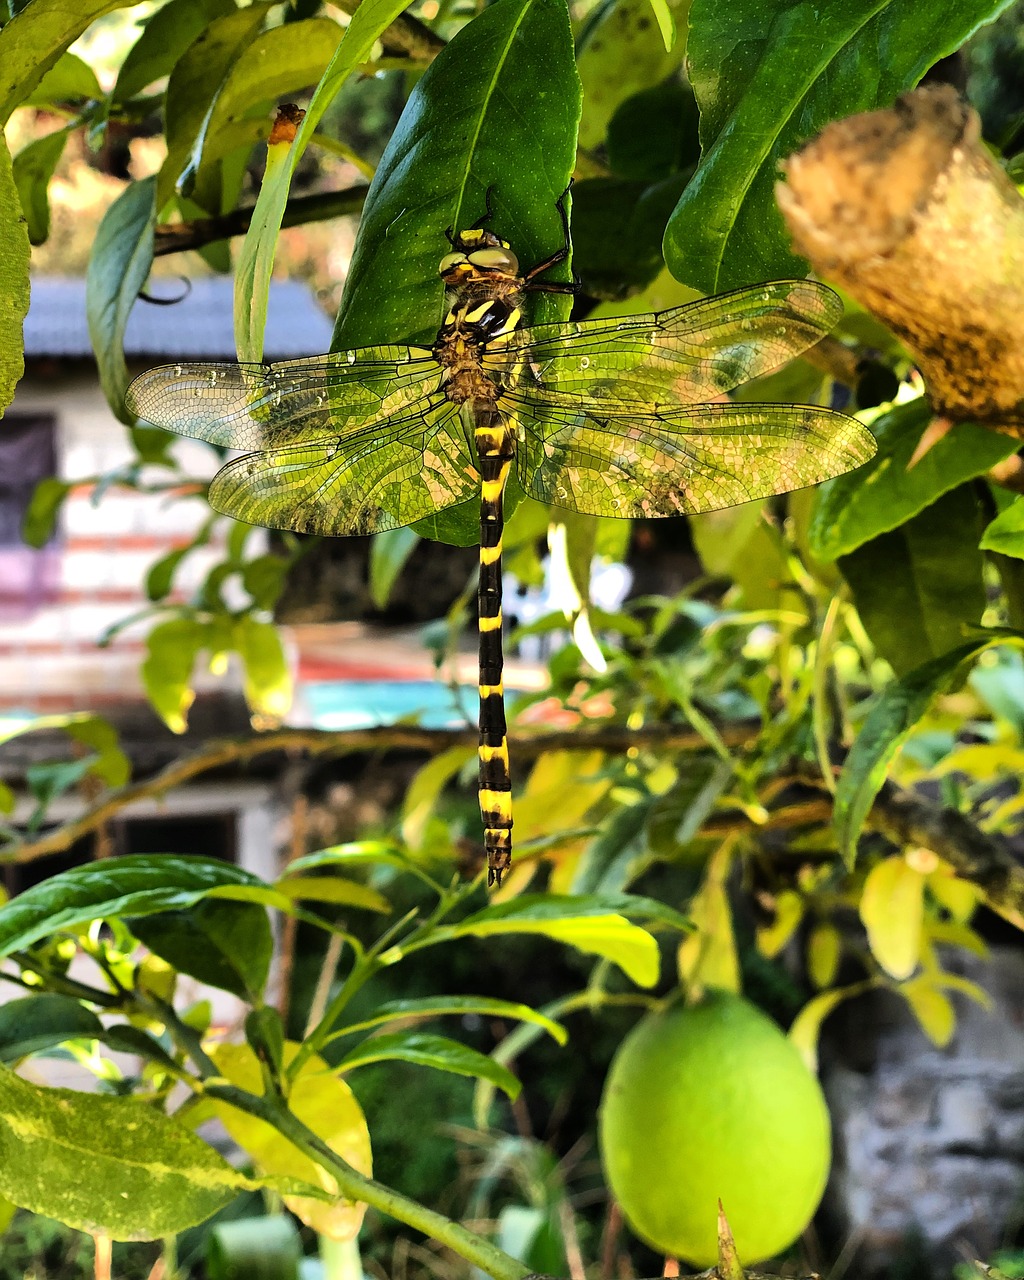 Lemon lime dragonfly